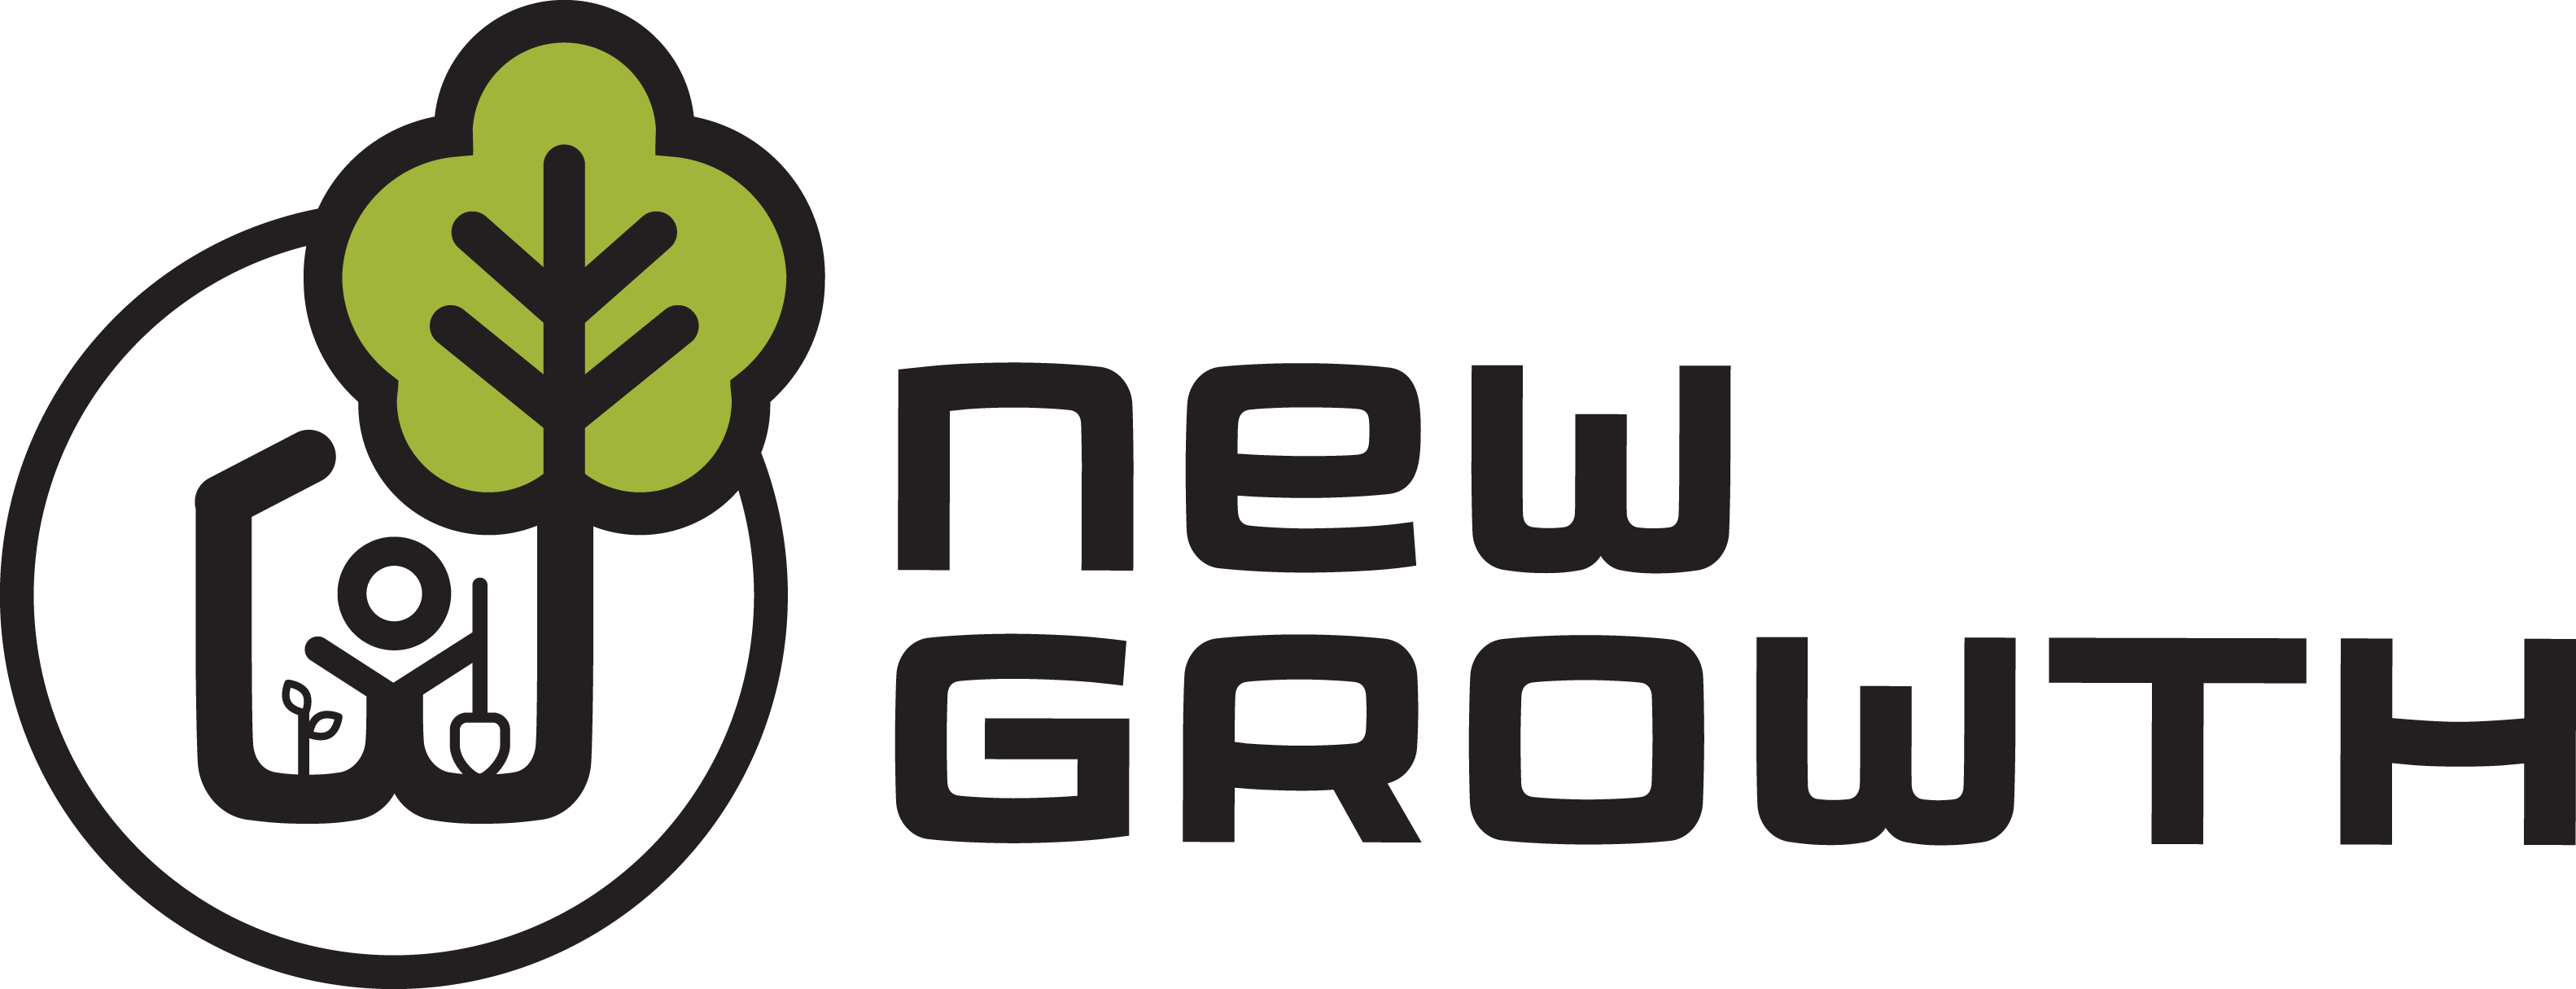 New Growth logo